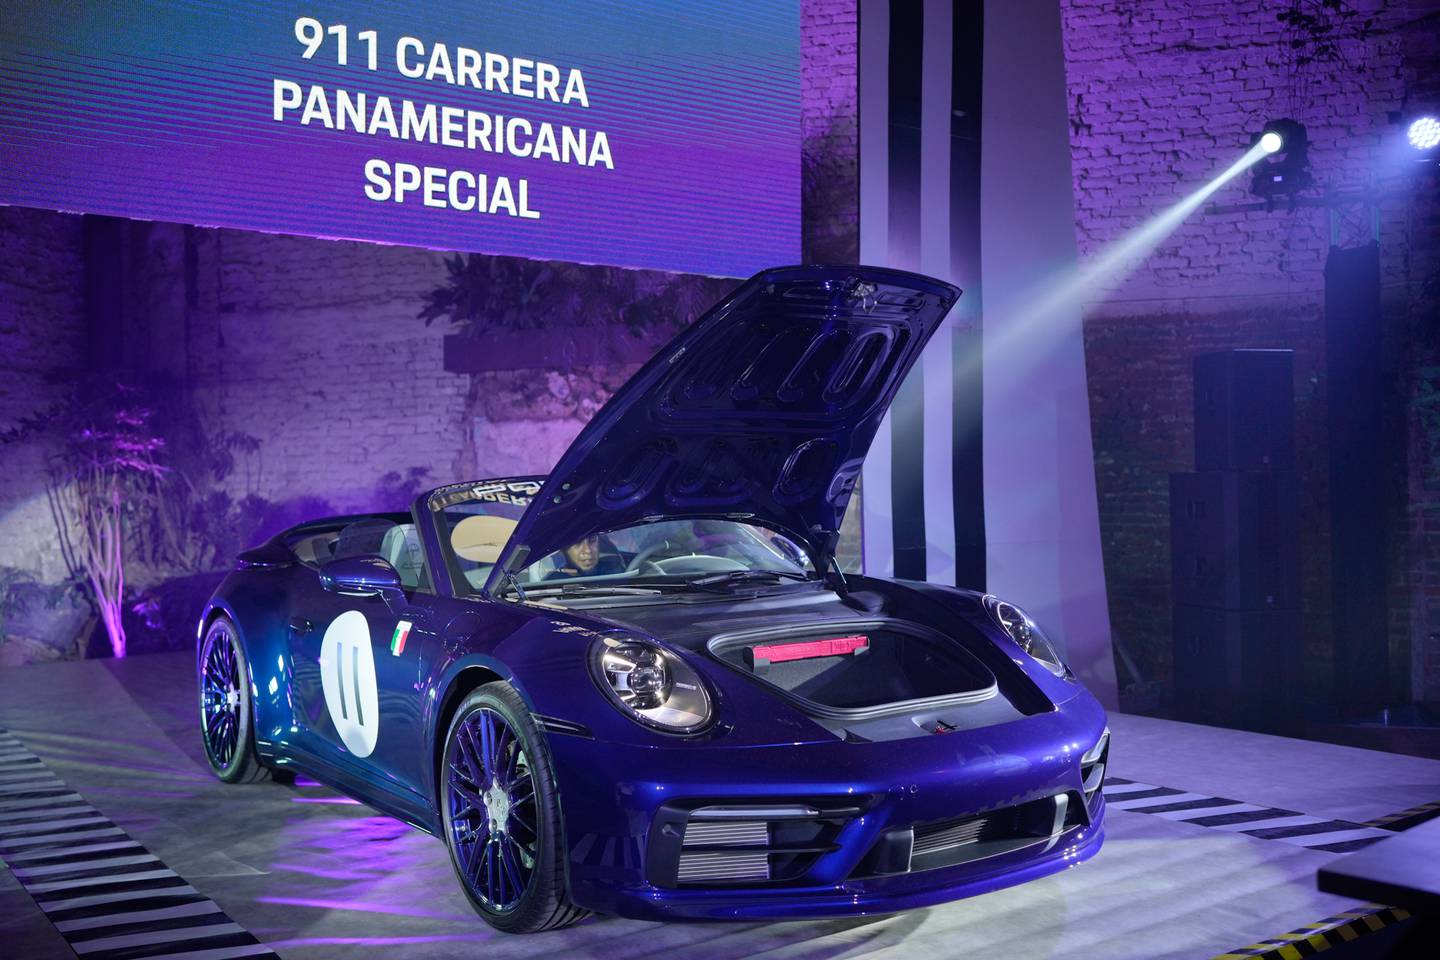 Porsche 911 Carrera Panamericana Special será subastado